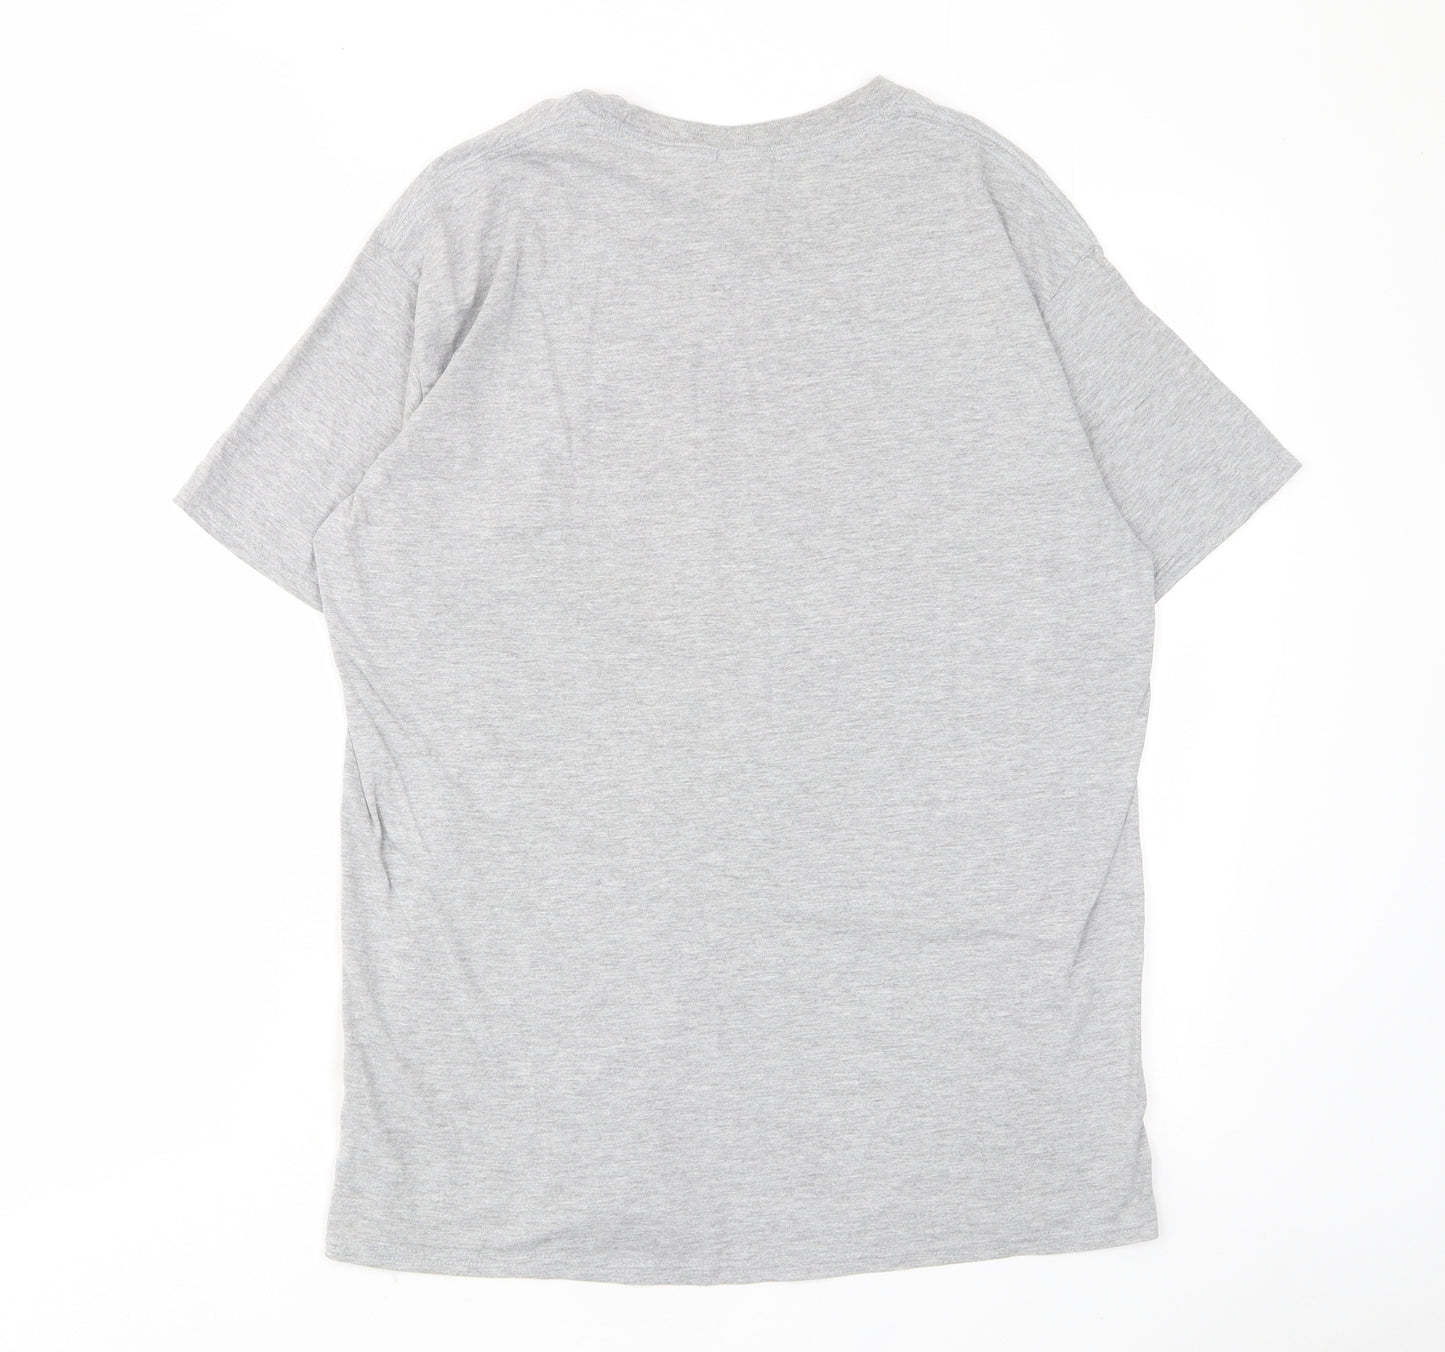 Boohoo Womens Grey Cotton Basic T-Shirt Size L Crew Neck